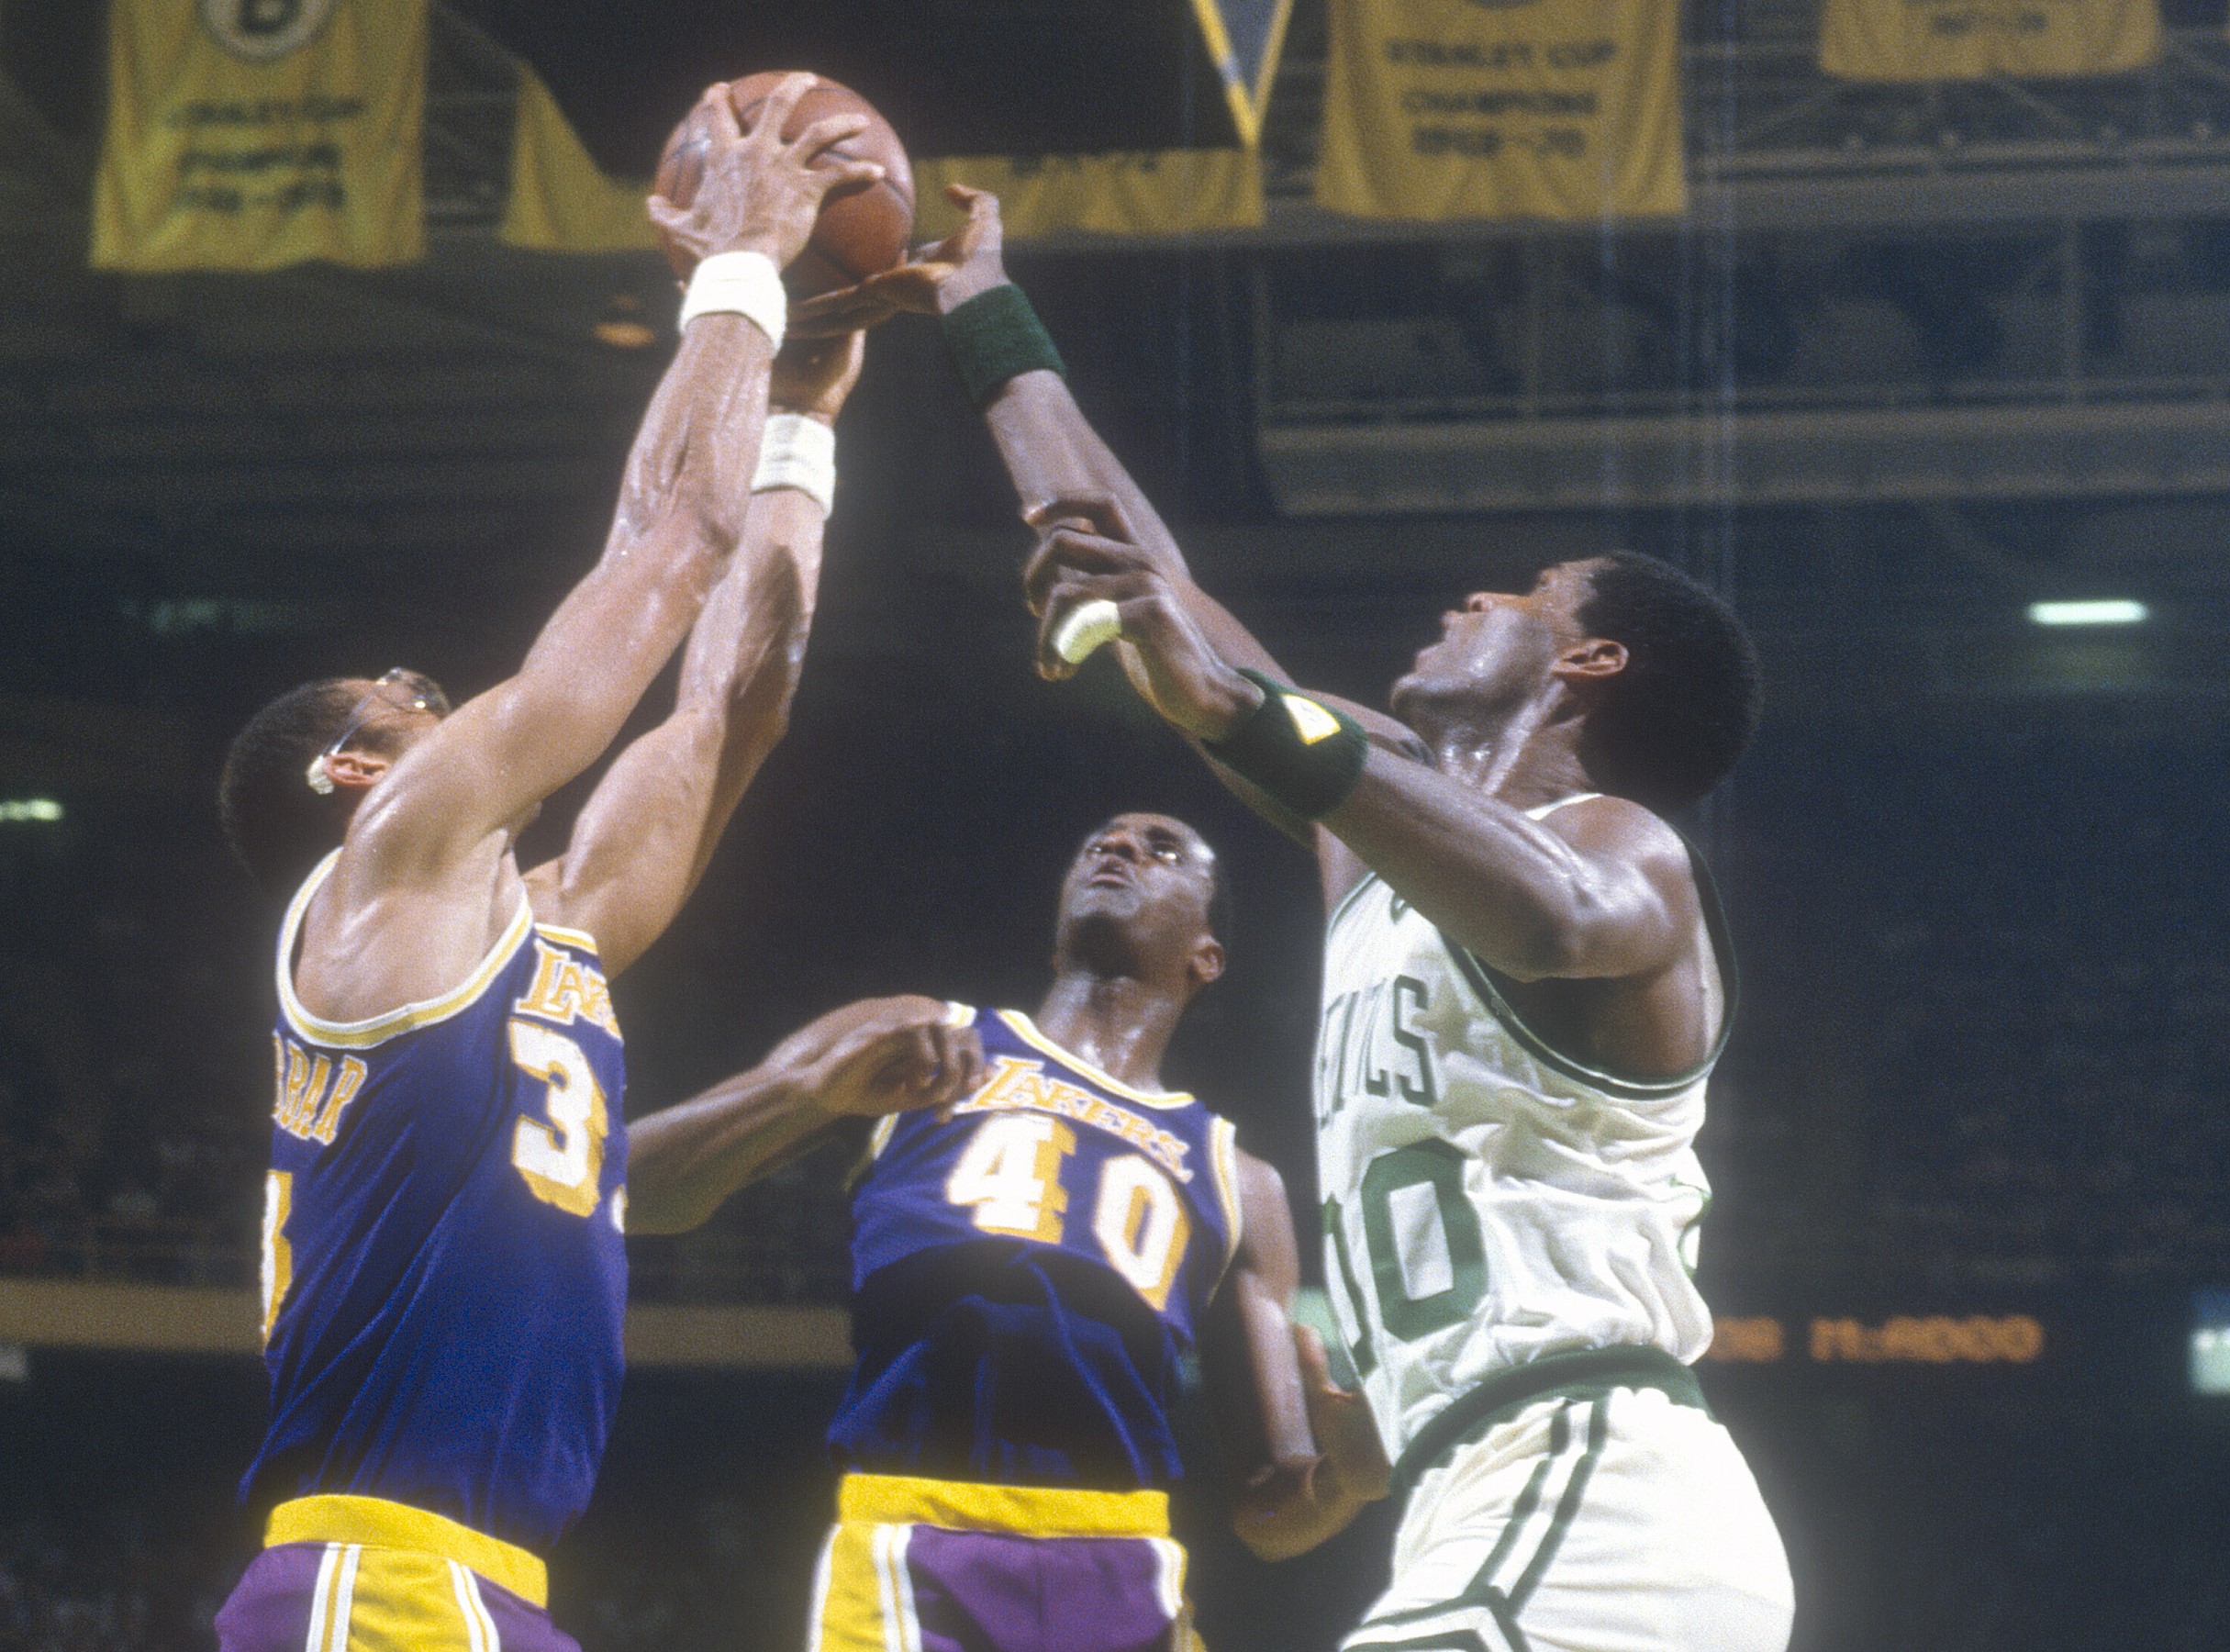 Kareem Abdul-Jabbar of the Los Angeles Lakers battles for a rebound with Robert Parish of the Boston Celtics.